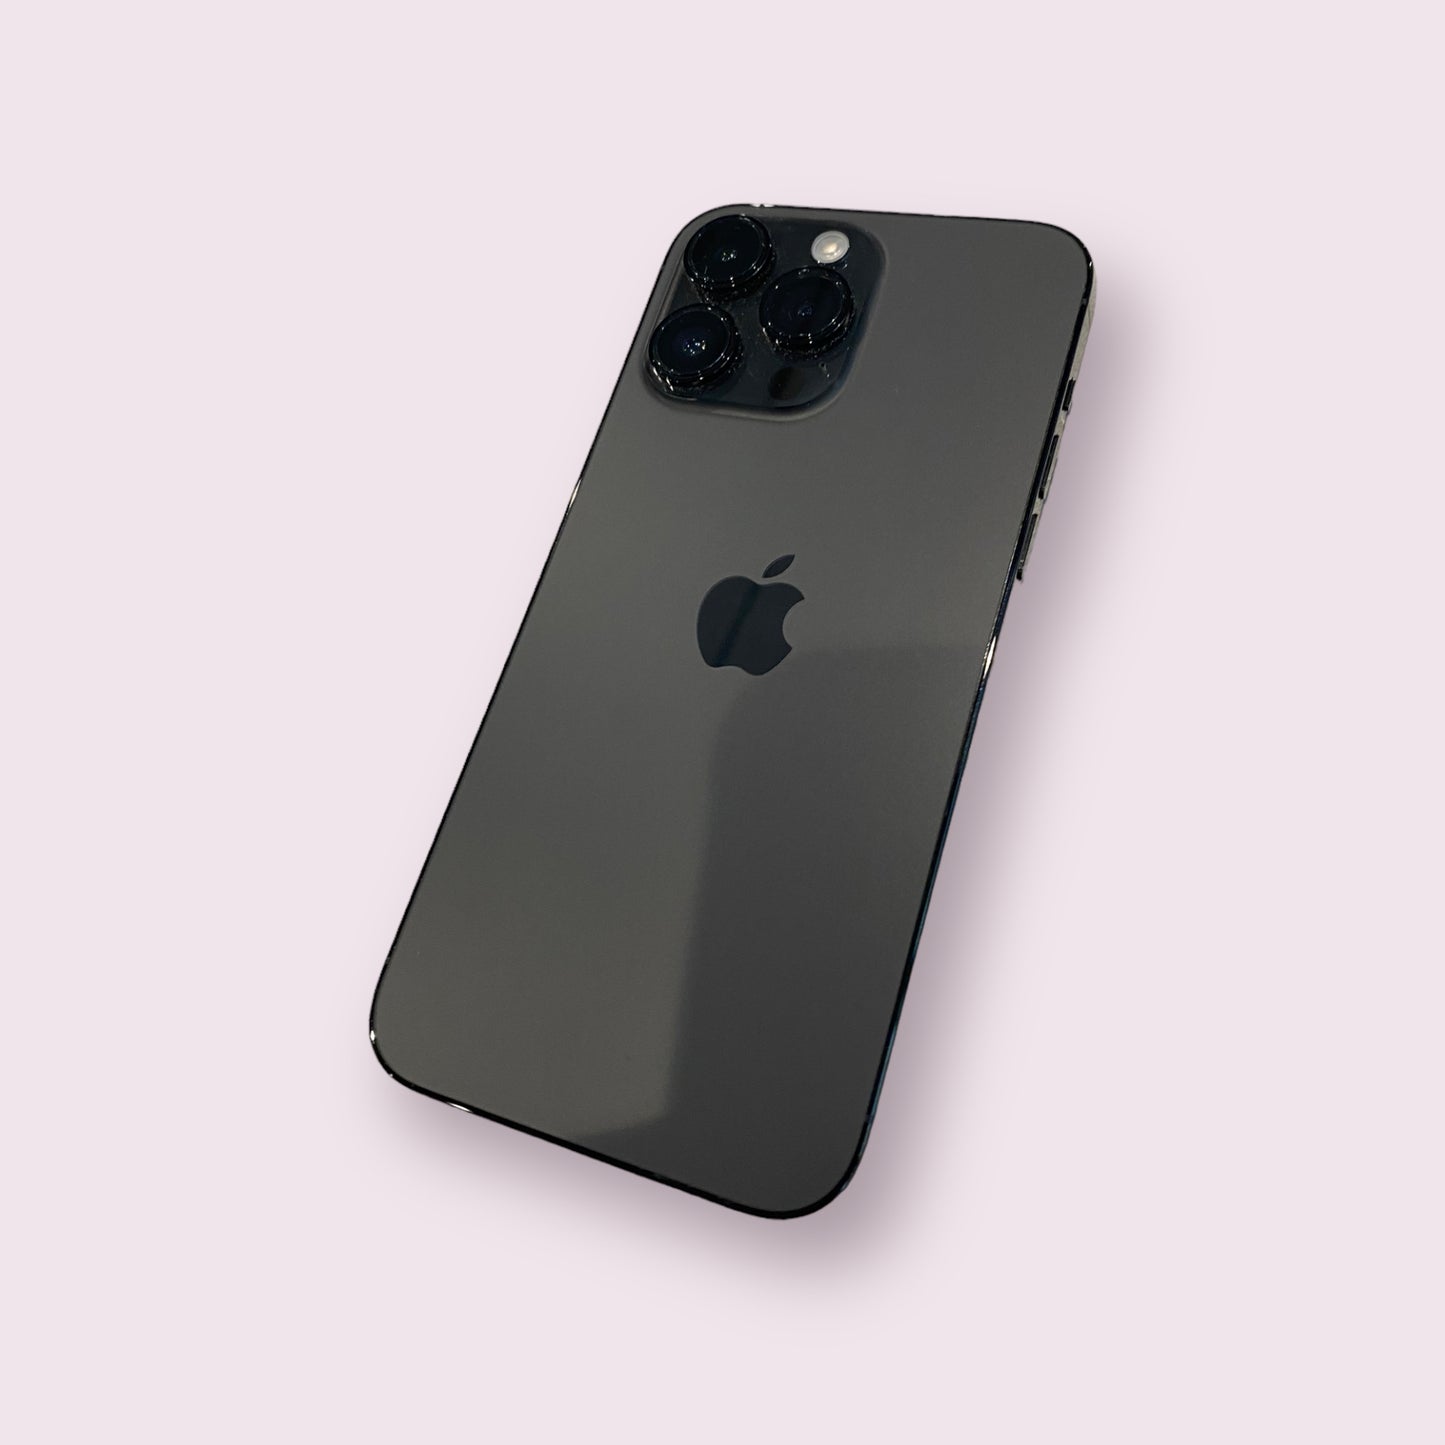 Apple iPhone 14 Pro Max 128GB Graphite Space Grey - Unlocked - Grade A